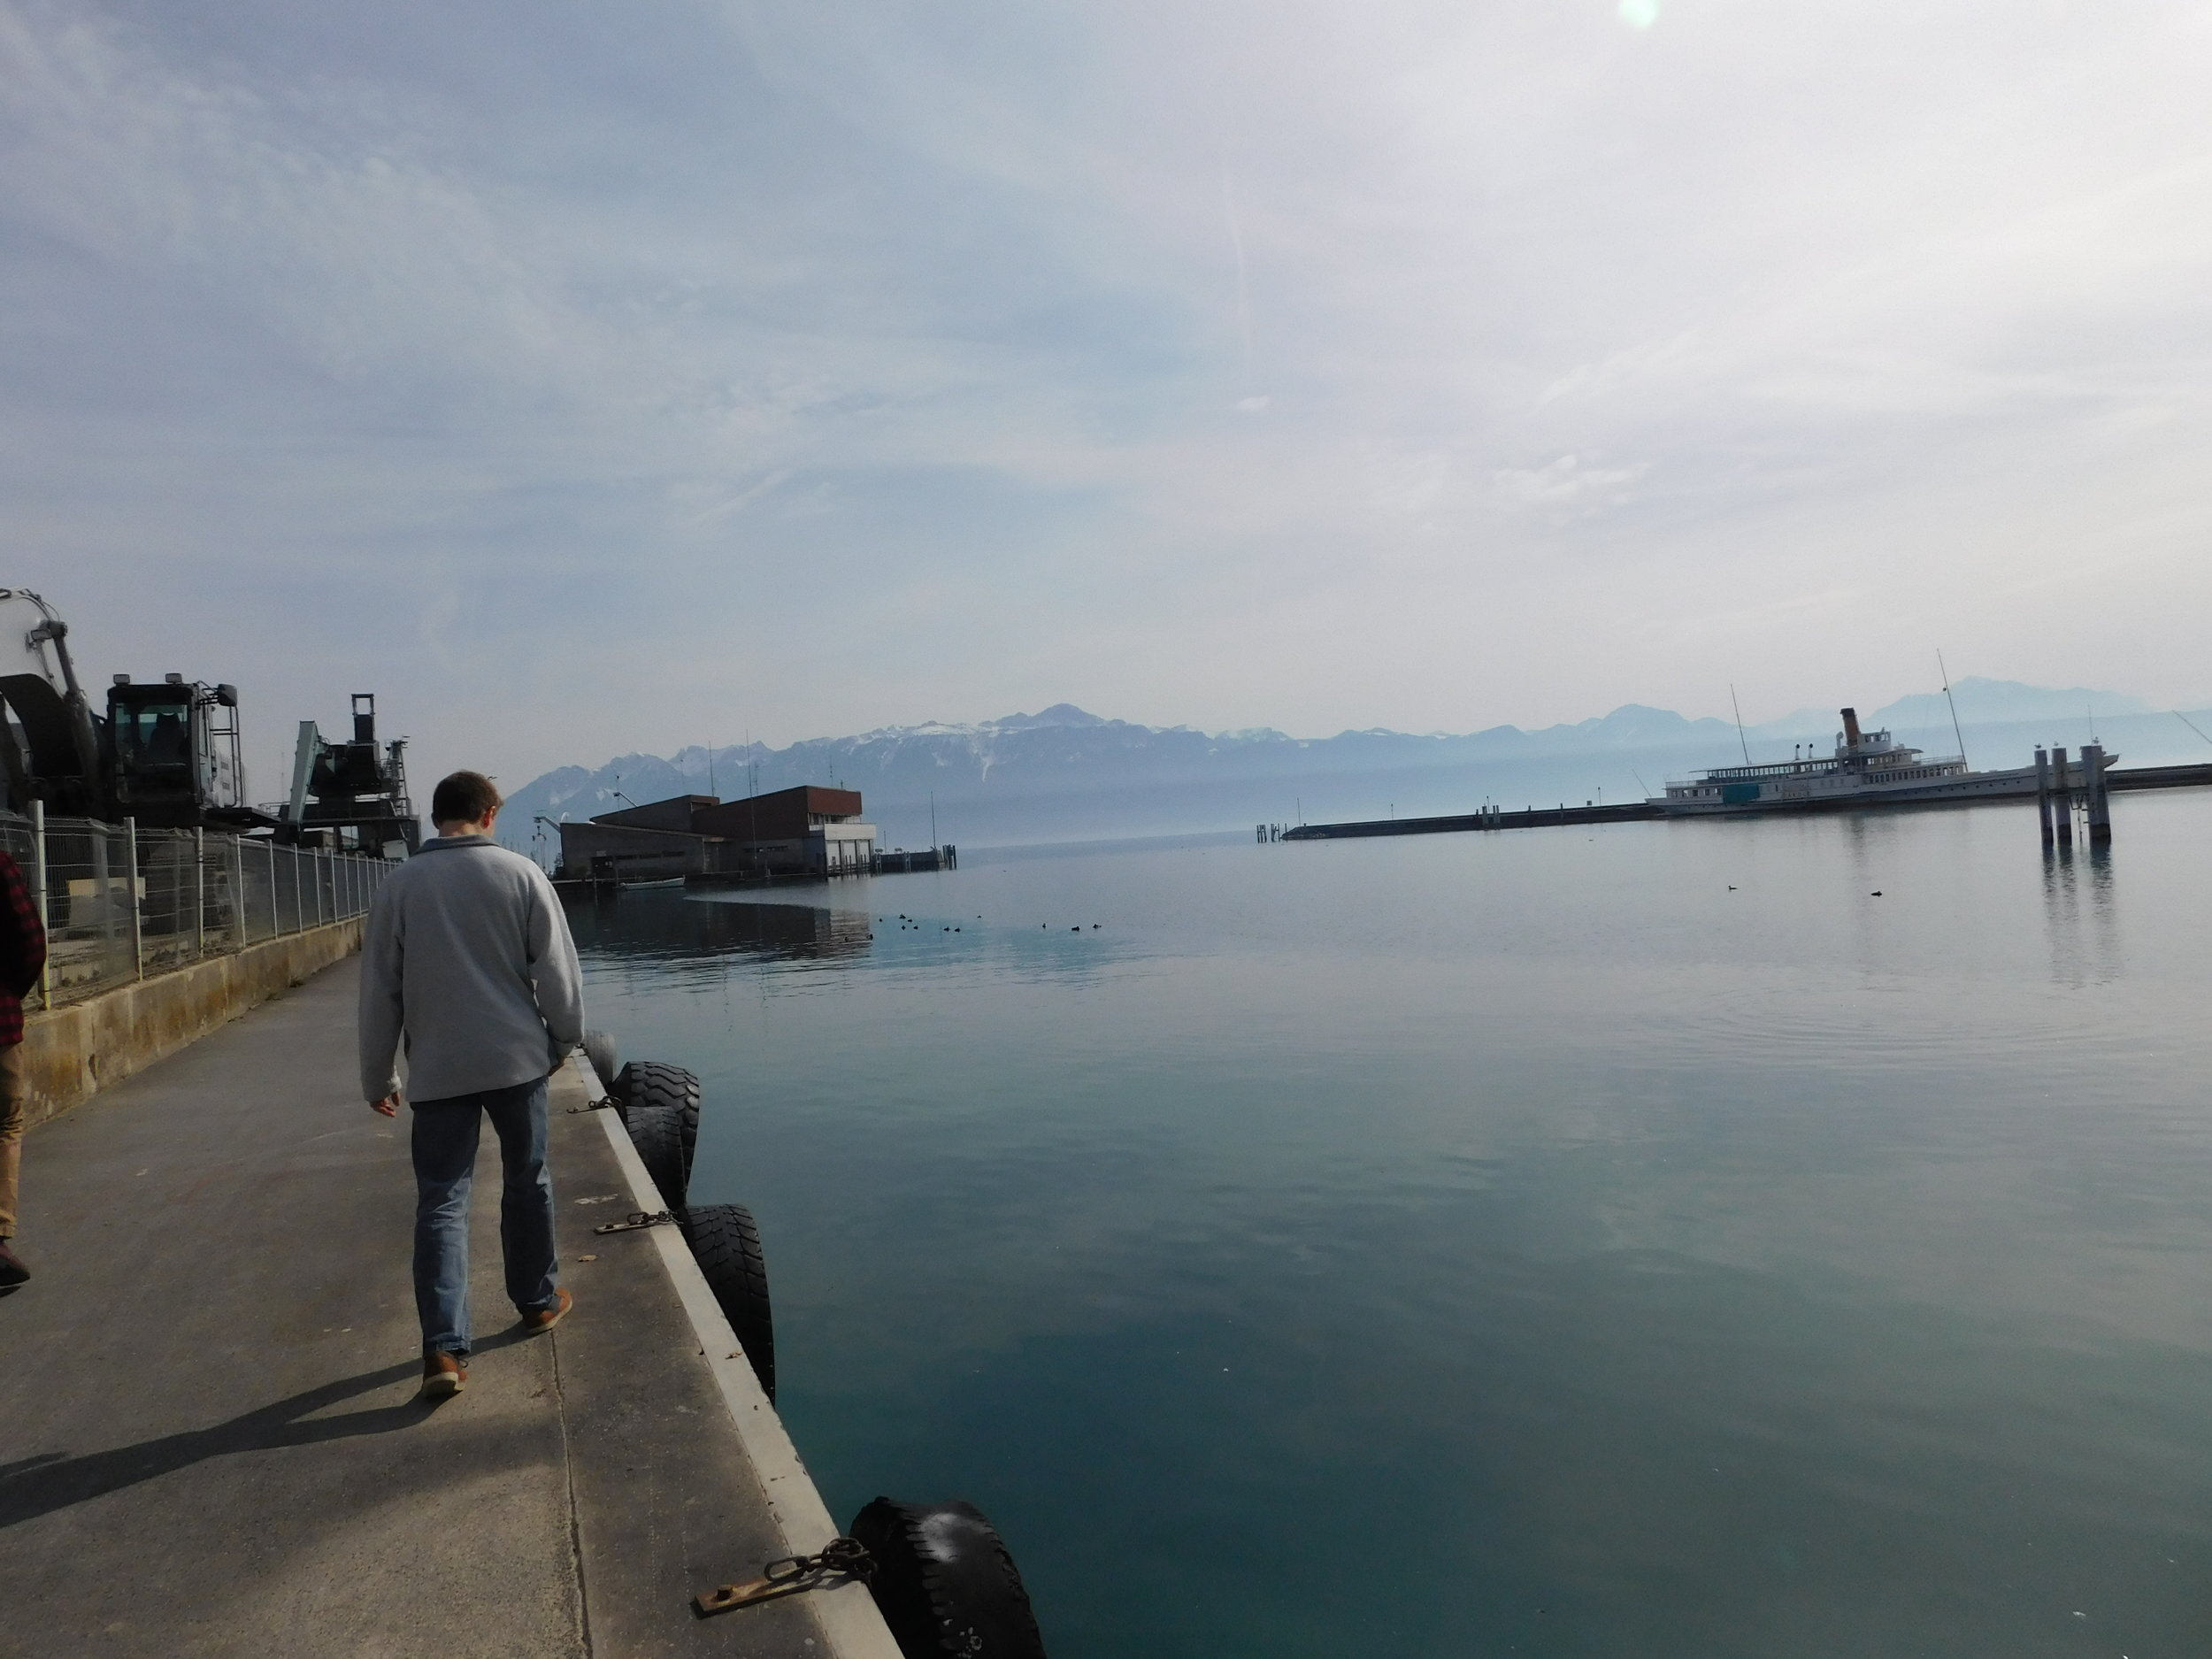  Seeing the harbor in Lausanne, Switzerland 